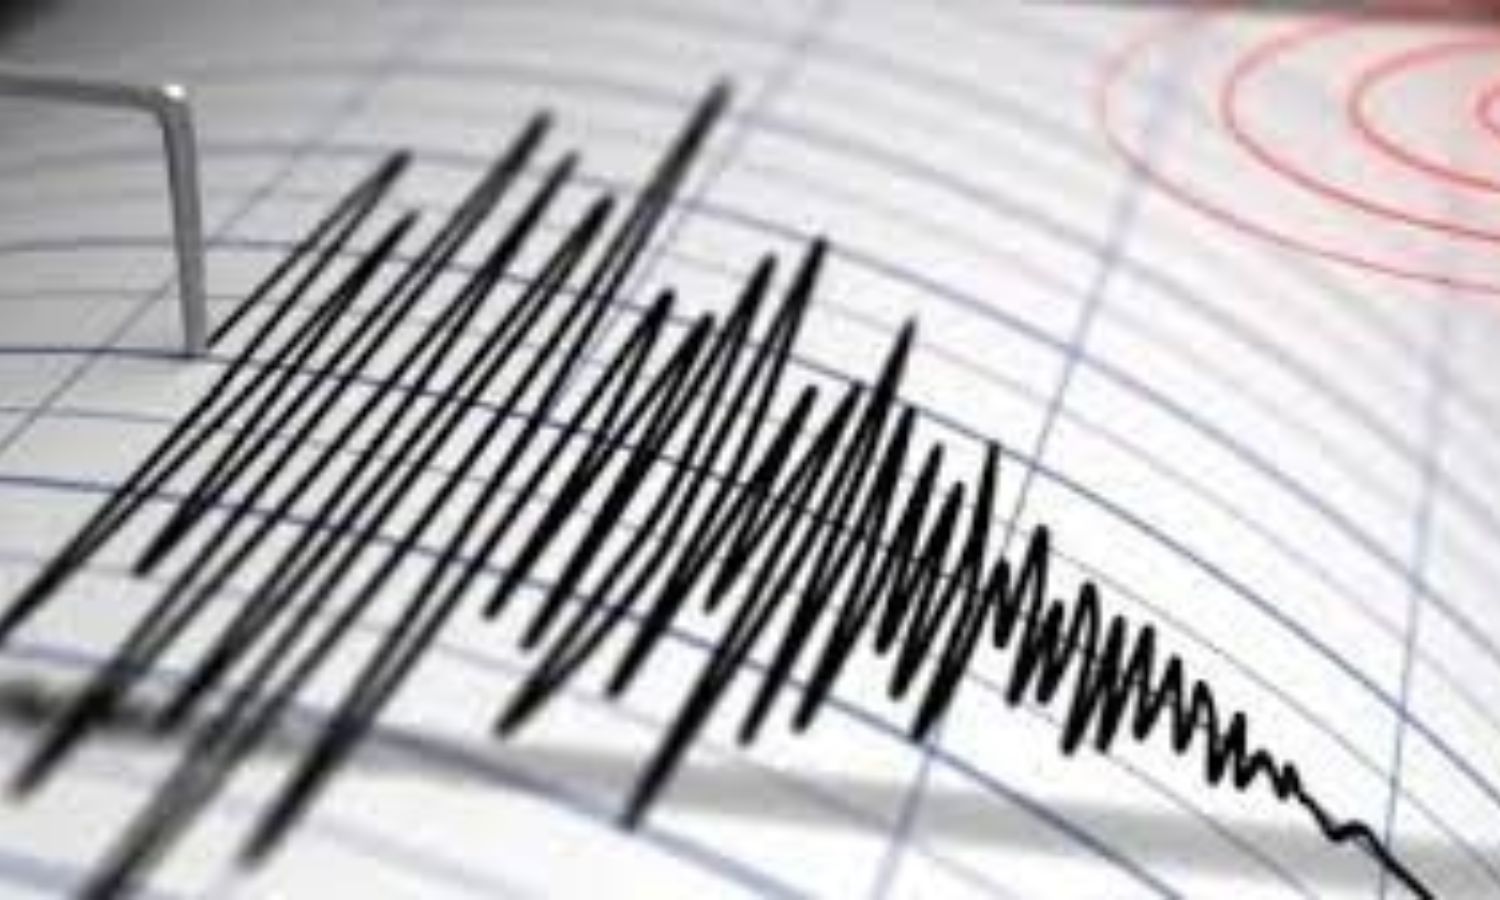 4.2 magnitude of Earthquake hits Afghanistan